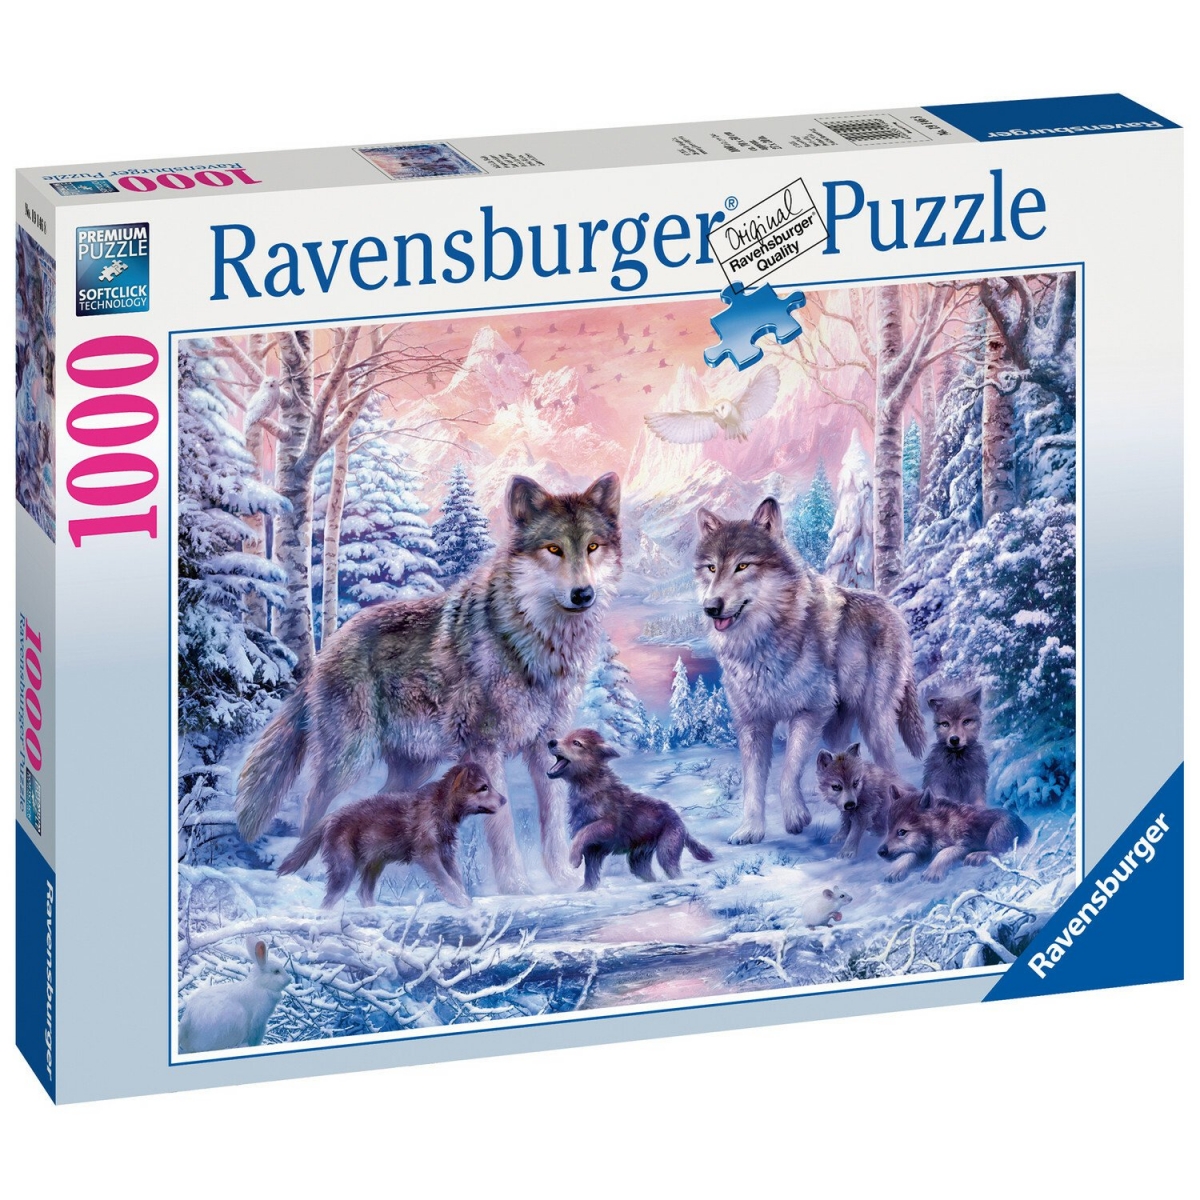   Ravensburger   - 1000 